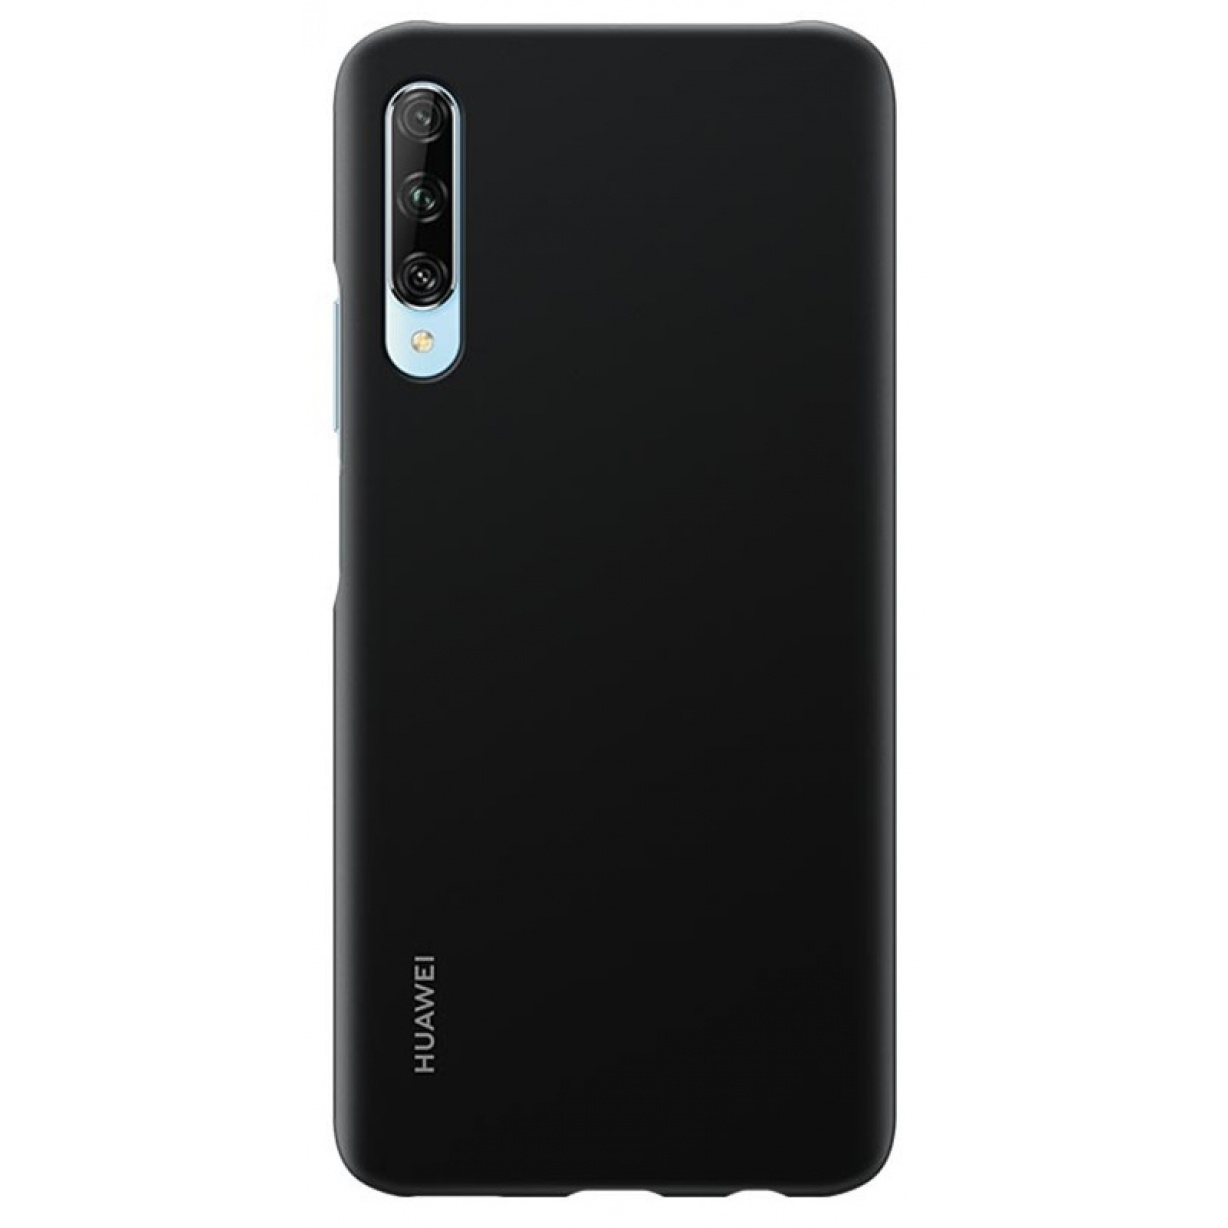 Nugarėlė Huawei P Smart Pro Protective Cover Black